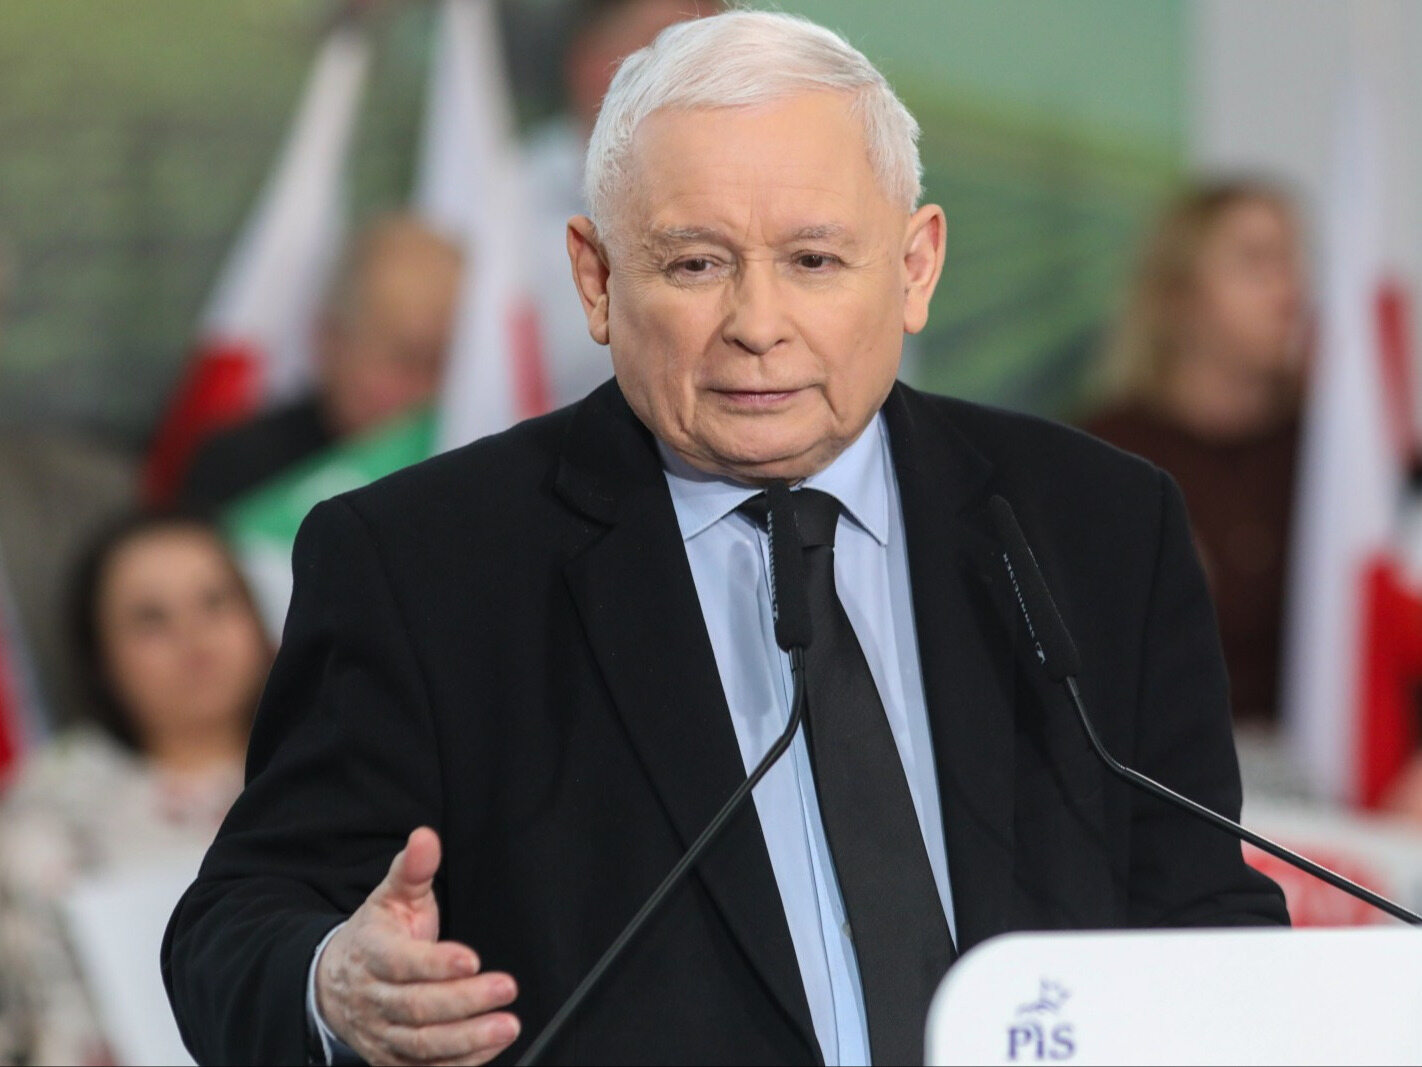 Jarosław Kaczyński suddenly changed his mind.  "The environment isolates the PiS president"